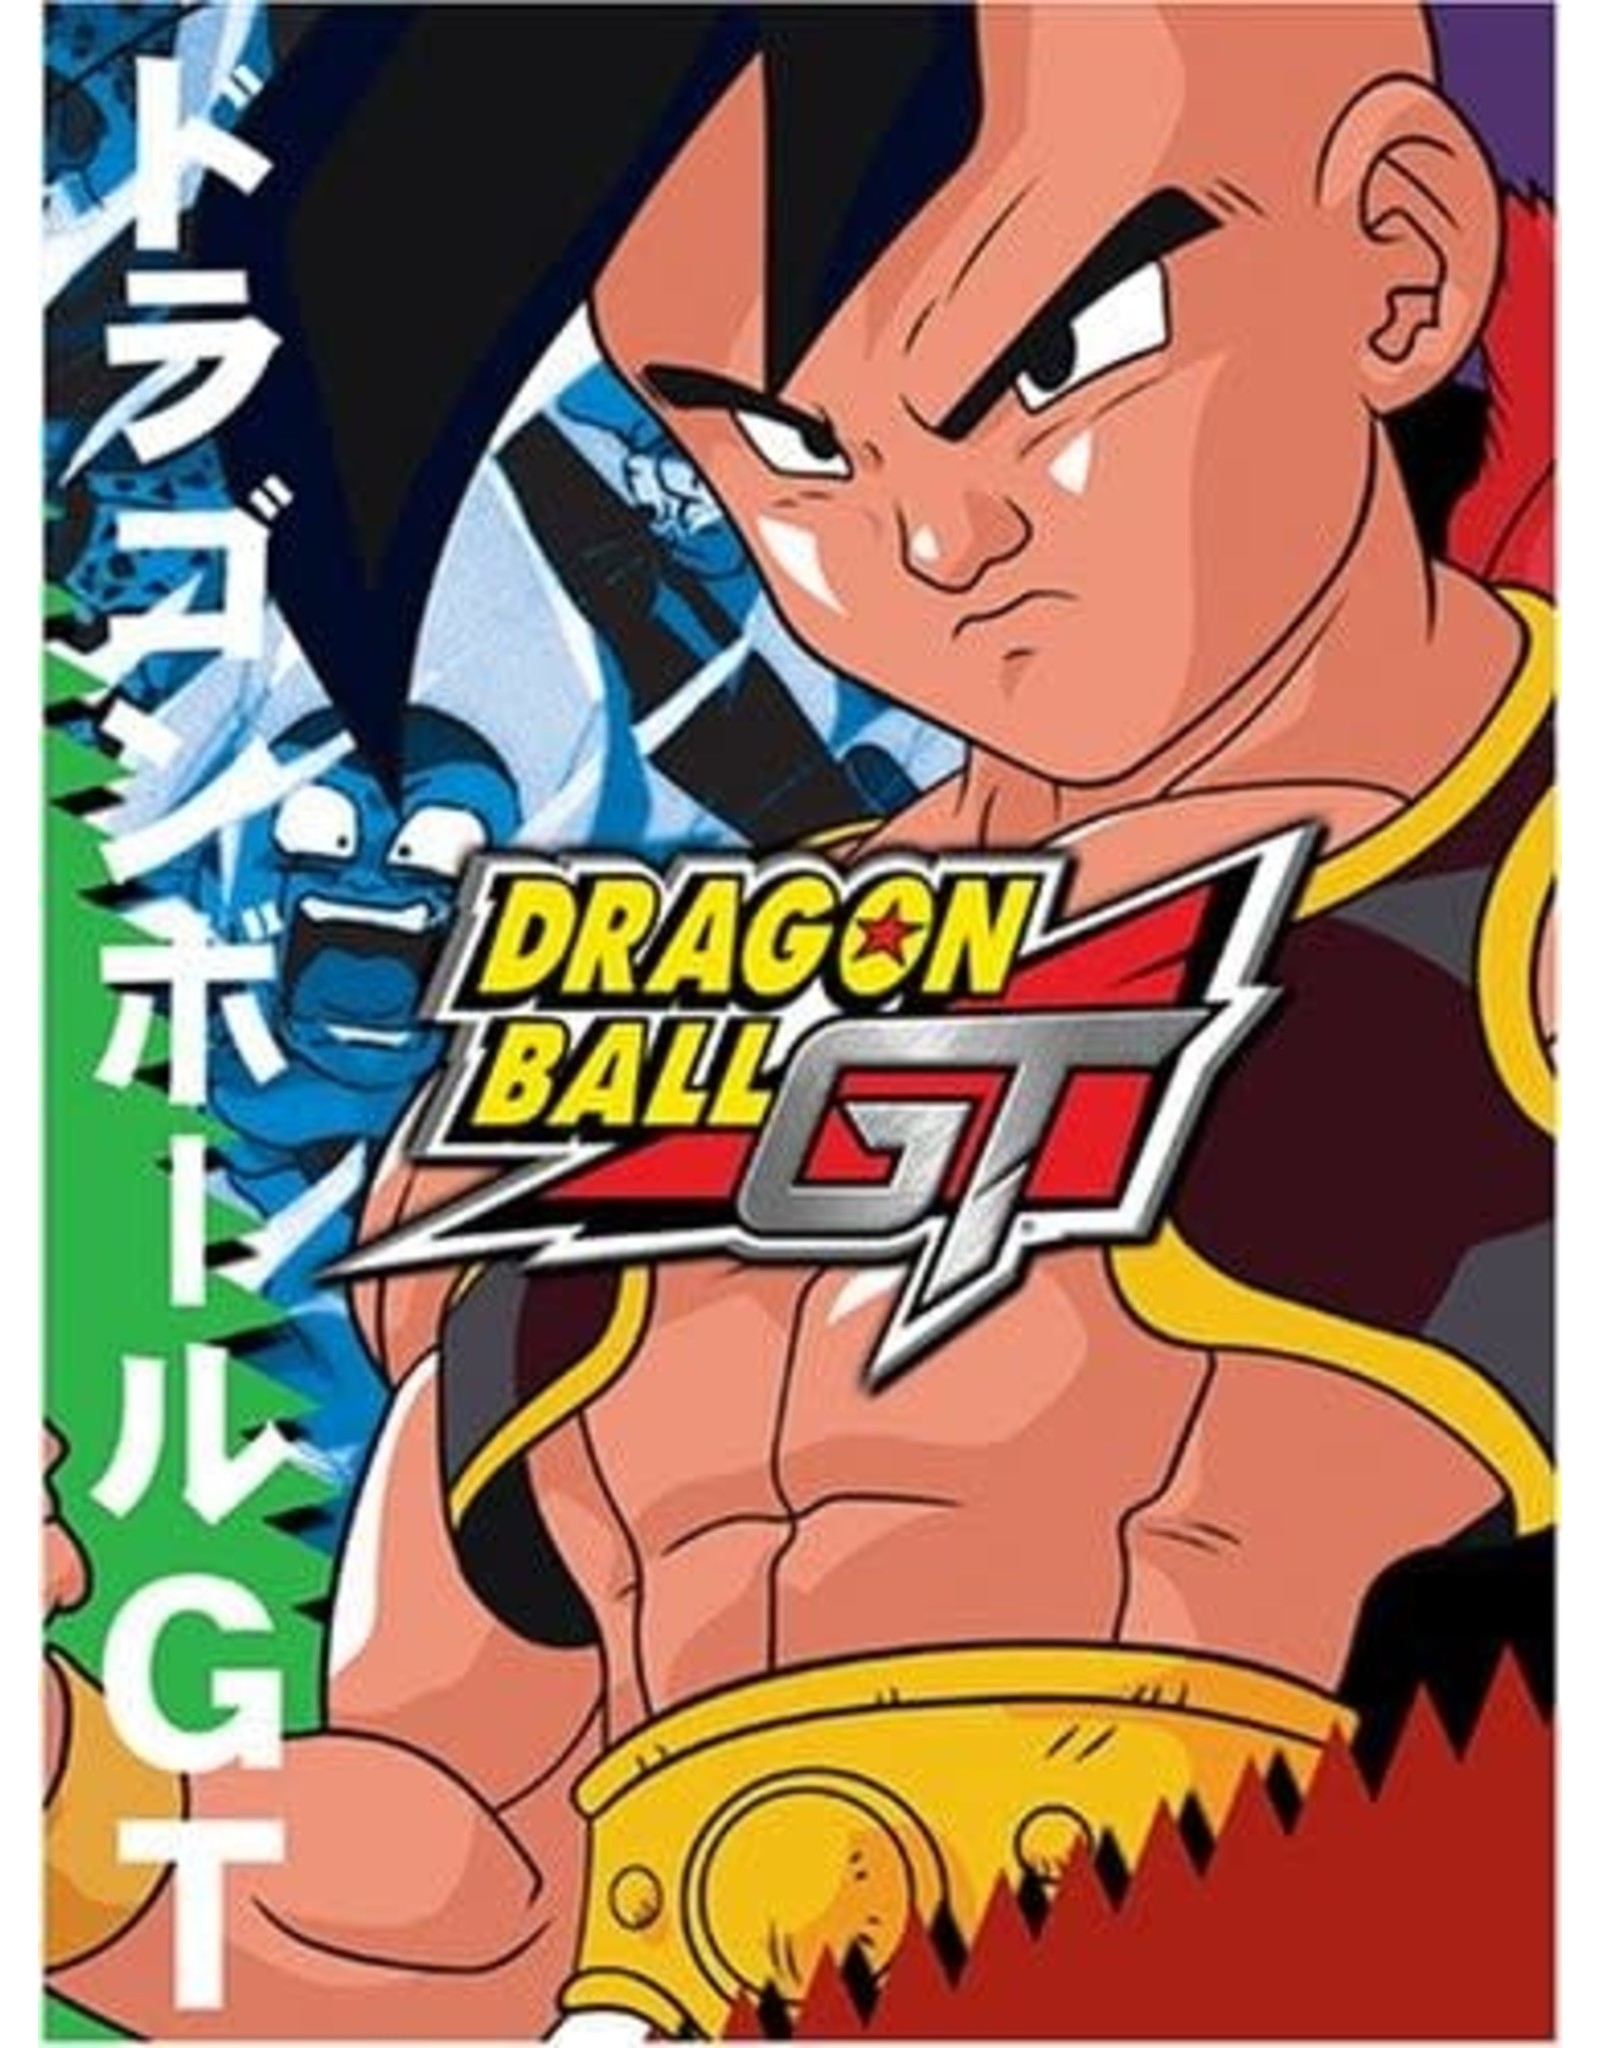 Anime & Animation Dragon Ball GT Vol 6-10 DVD Boxset (Used)